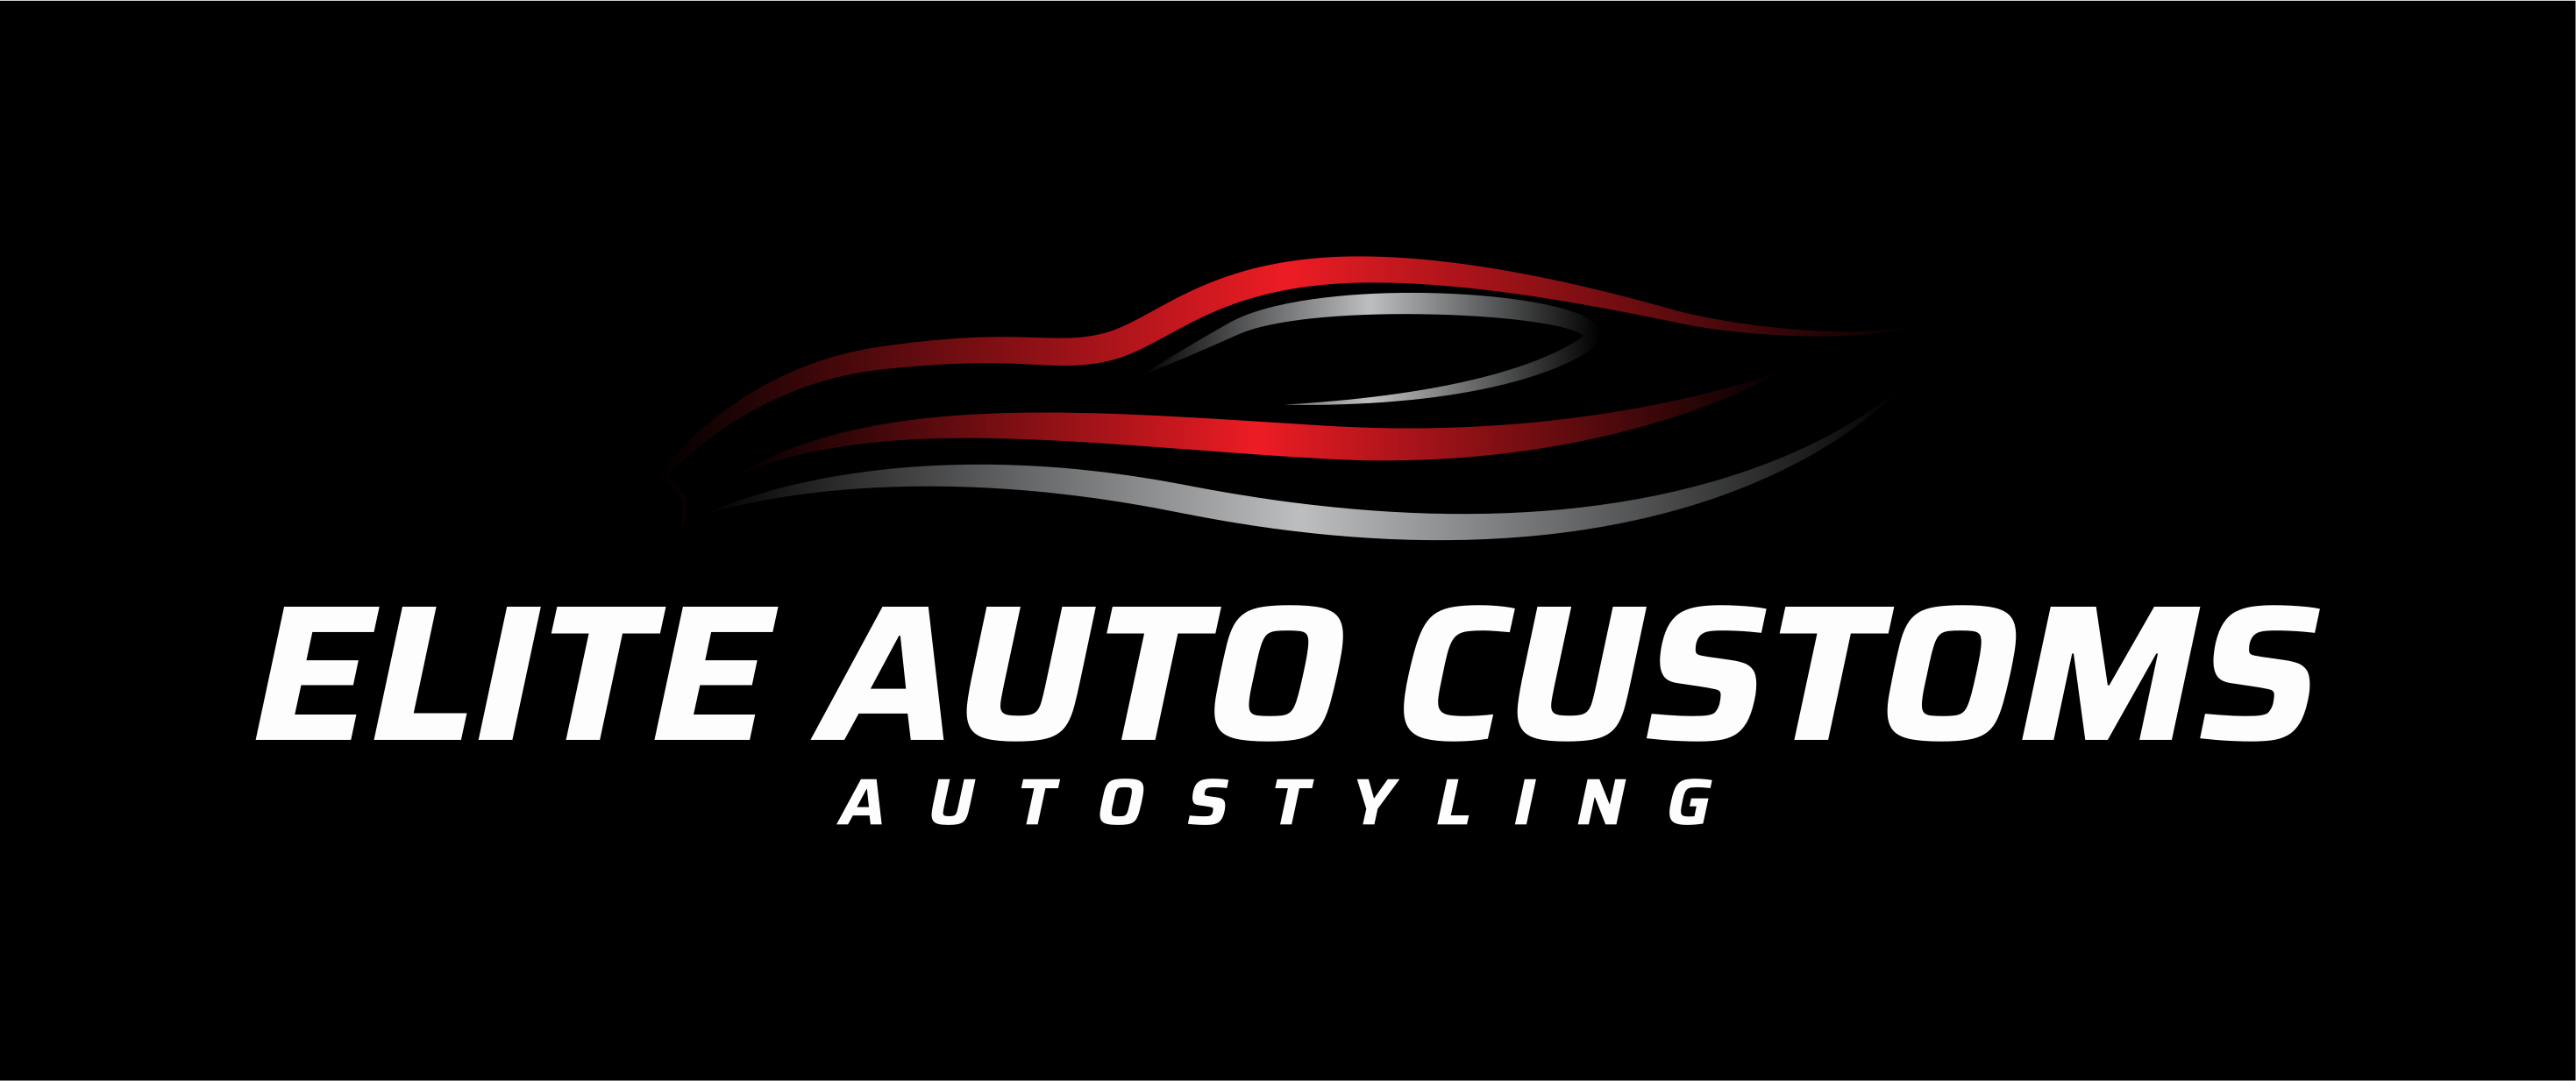 Elite Auto Customs auto styling